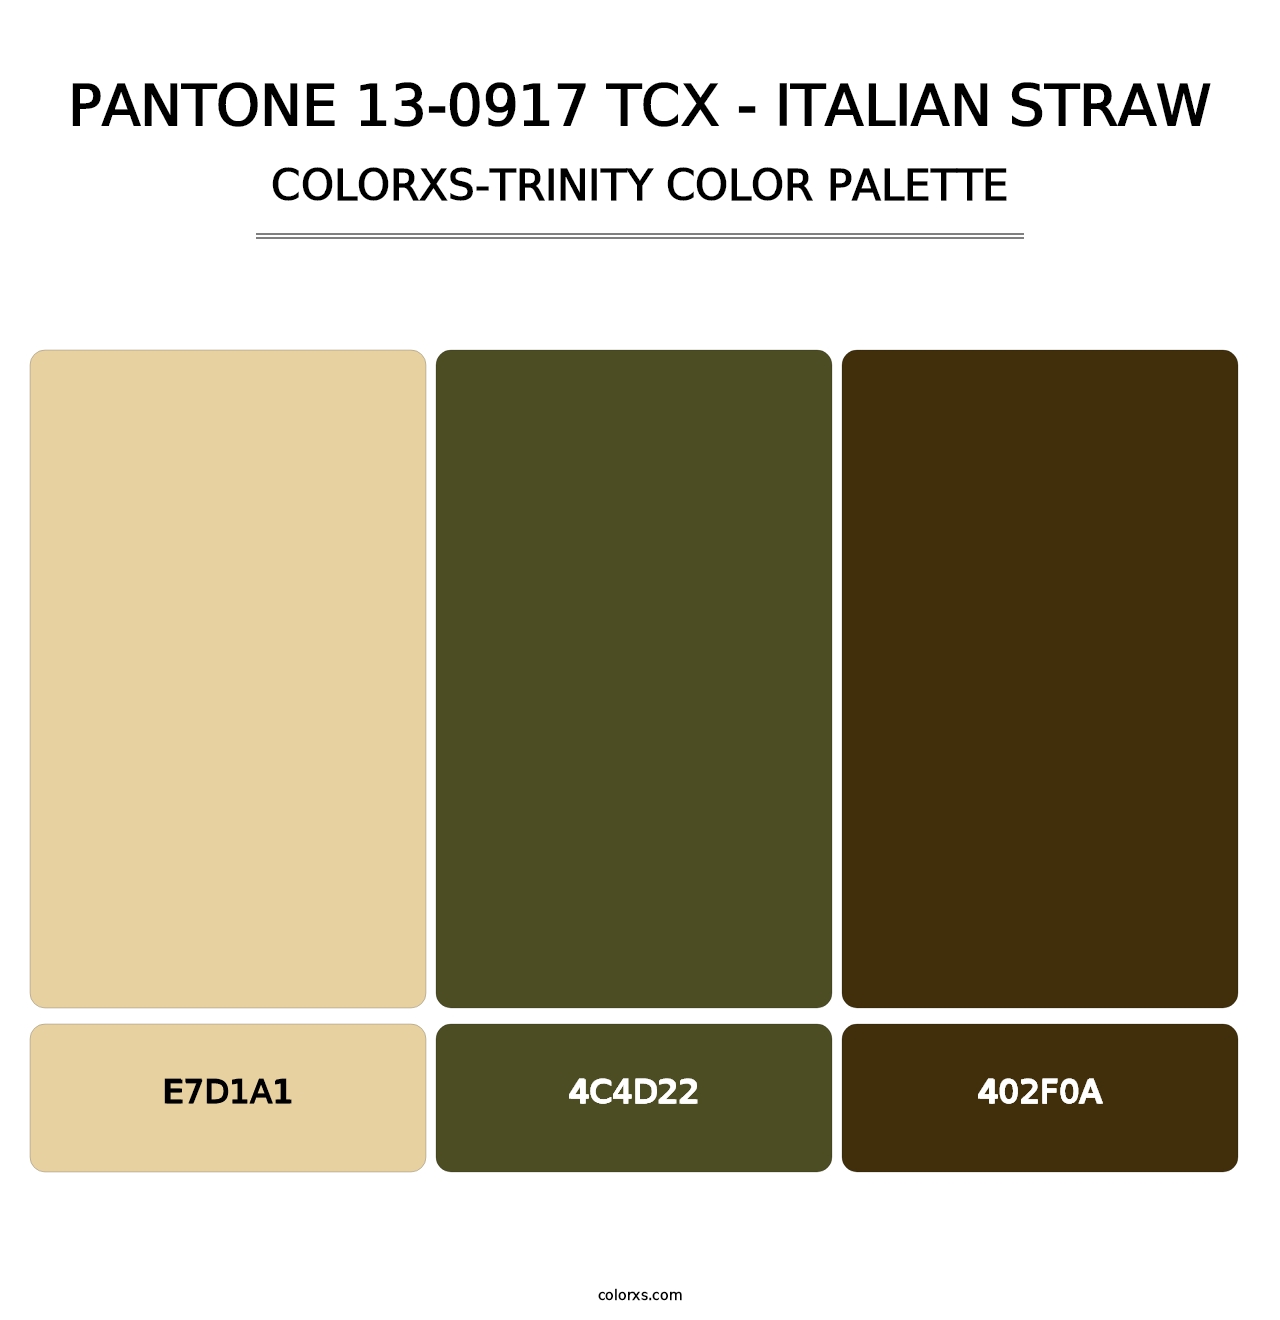 PANTONE 13-0917 TCX - Italian Straw - Colorxs Trinity Palette